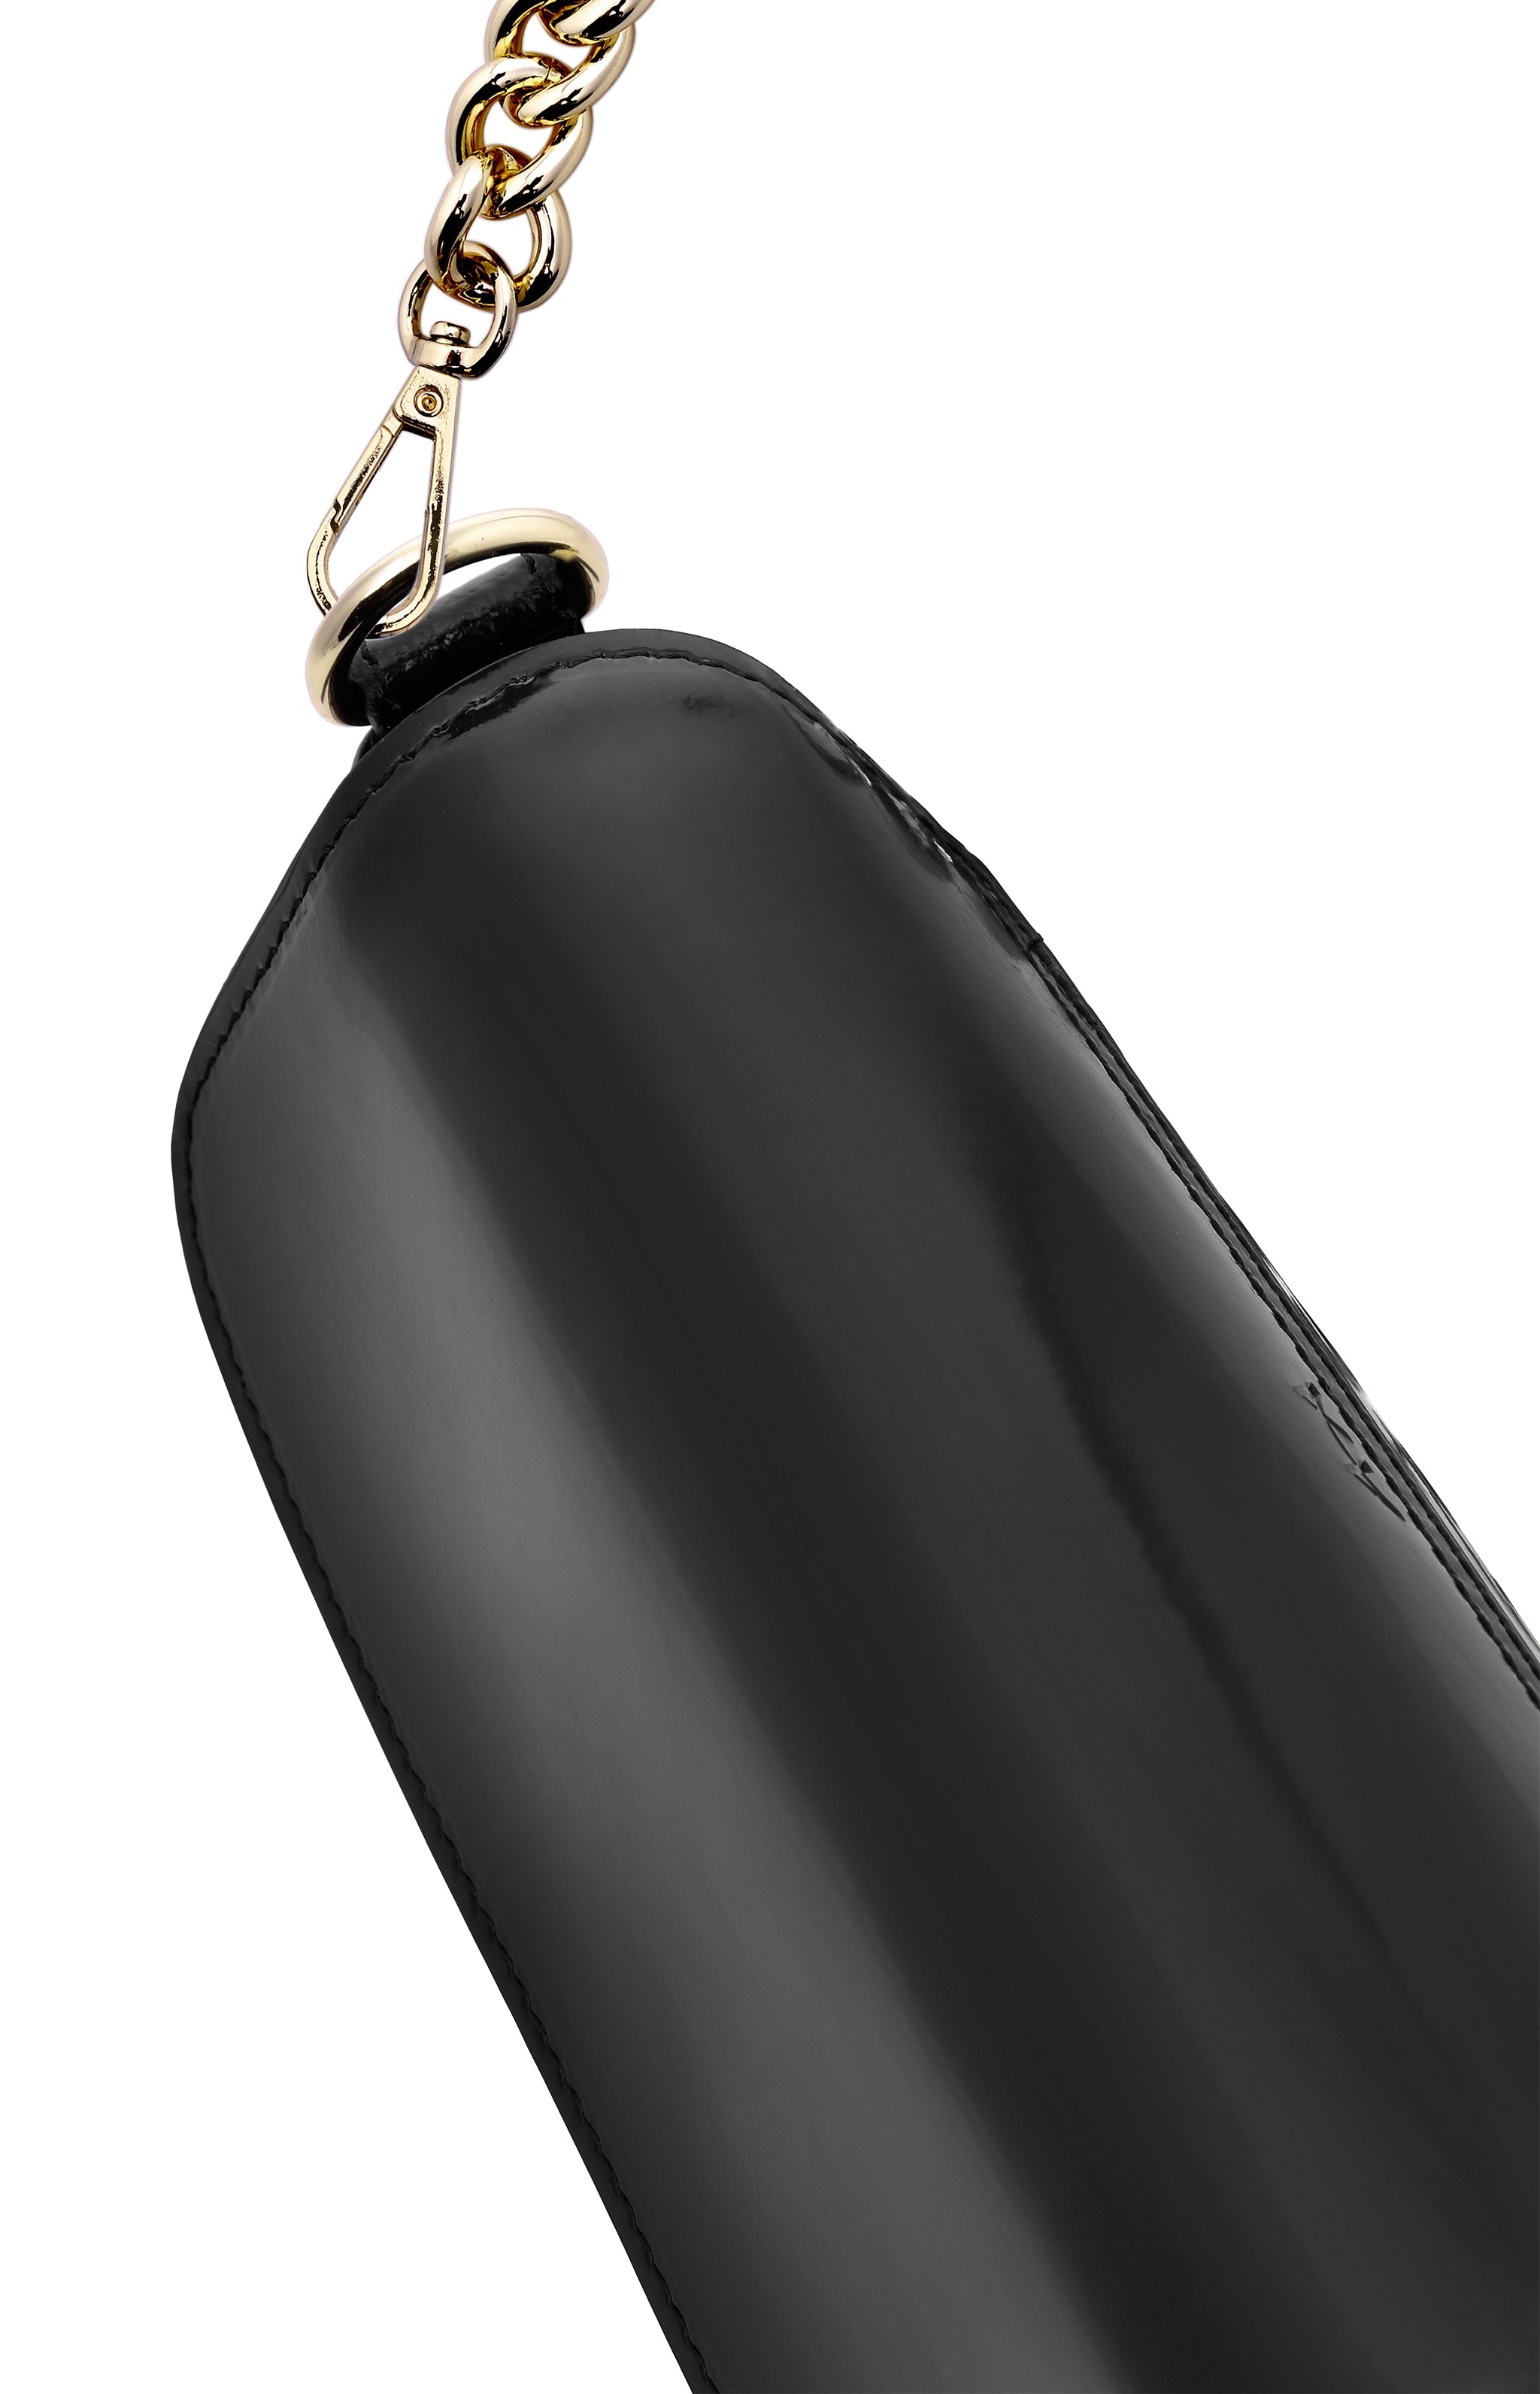 Ena Black Semi Patent Leather Shoulder Bag CL10534 NERO - 11